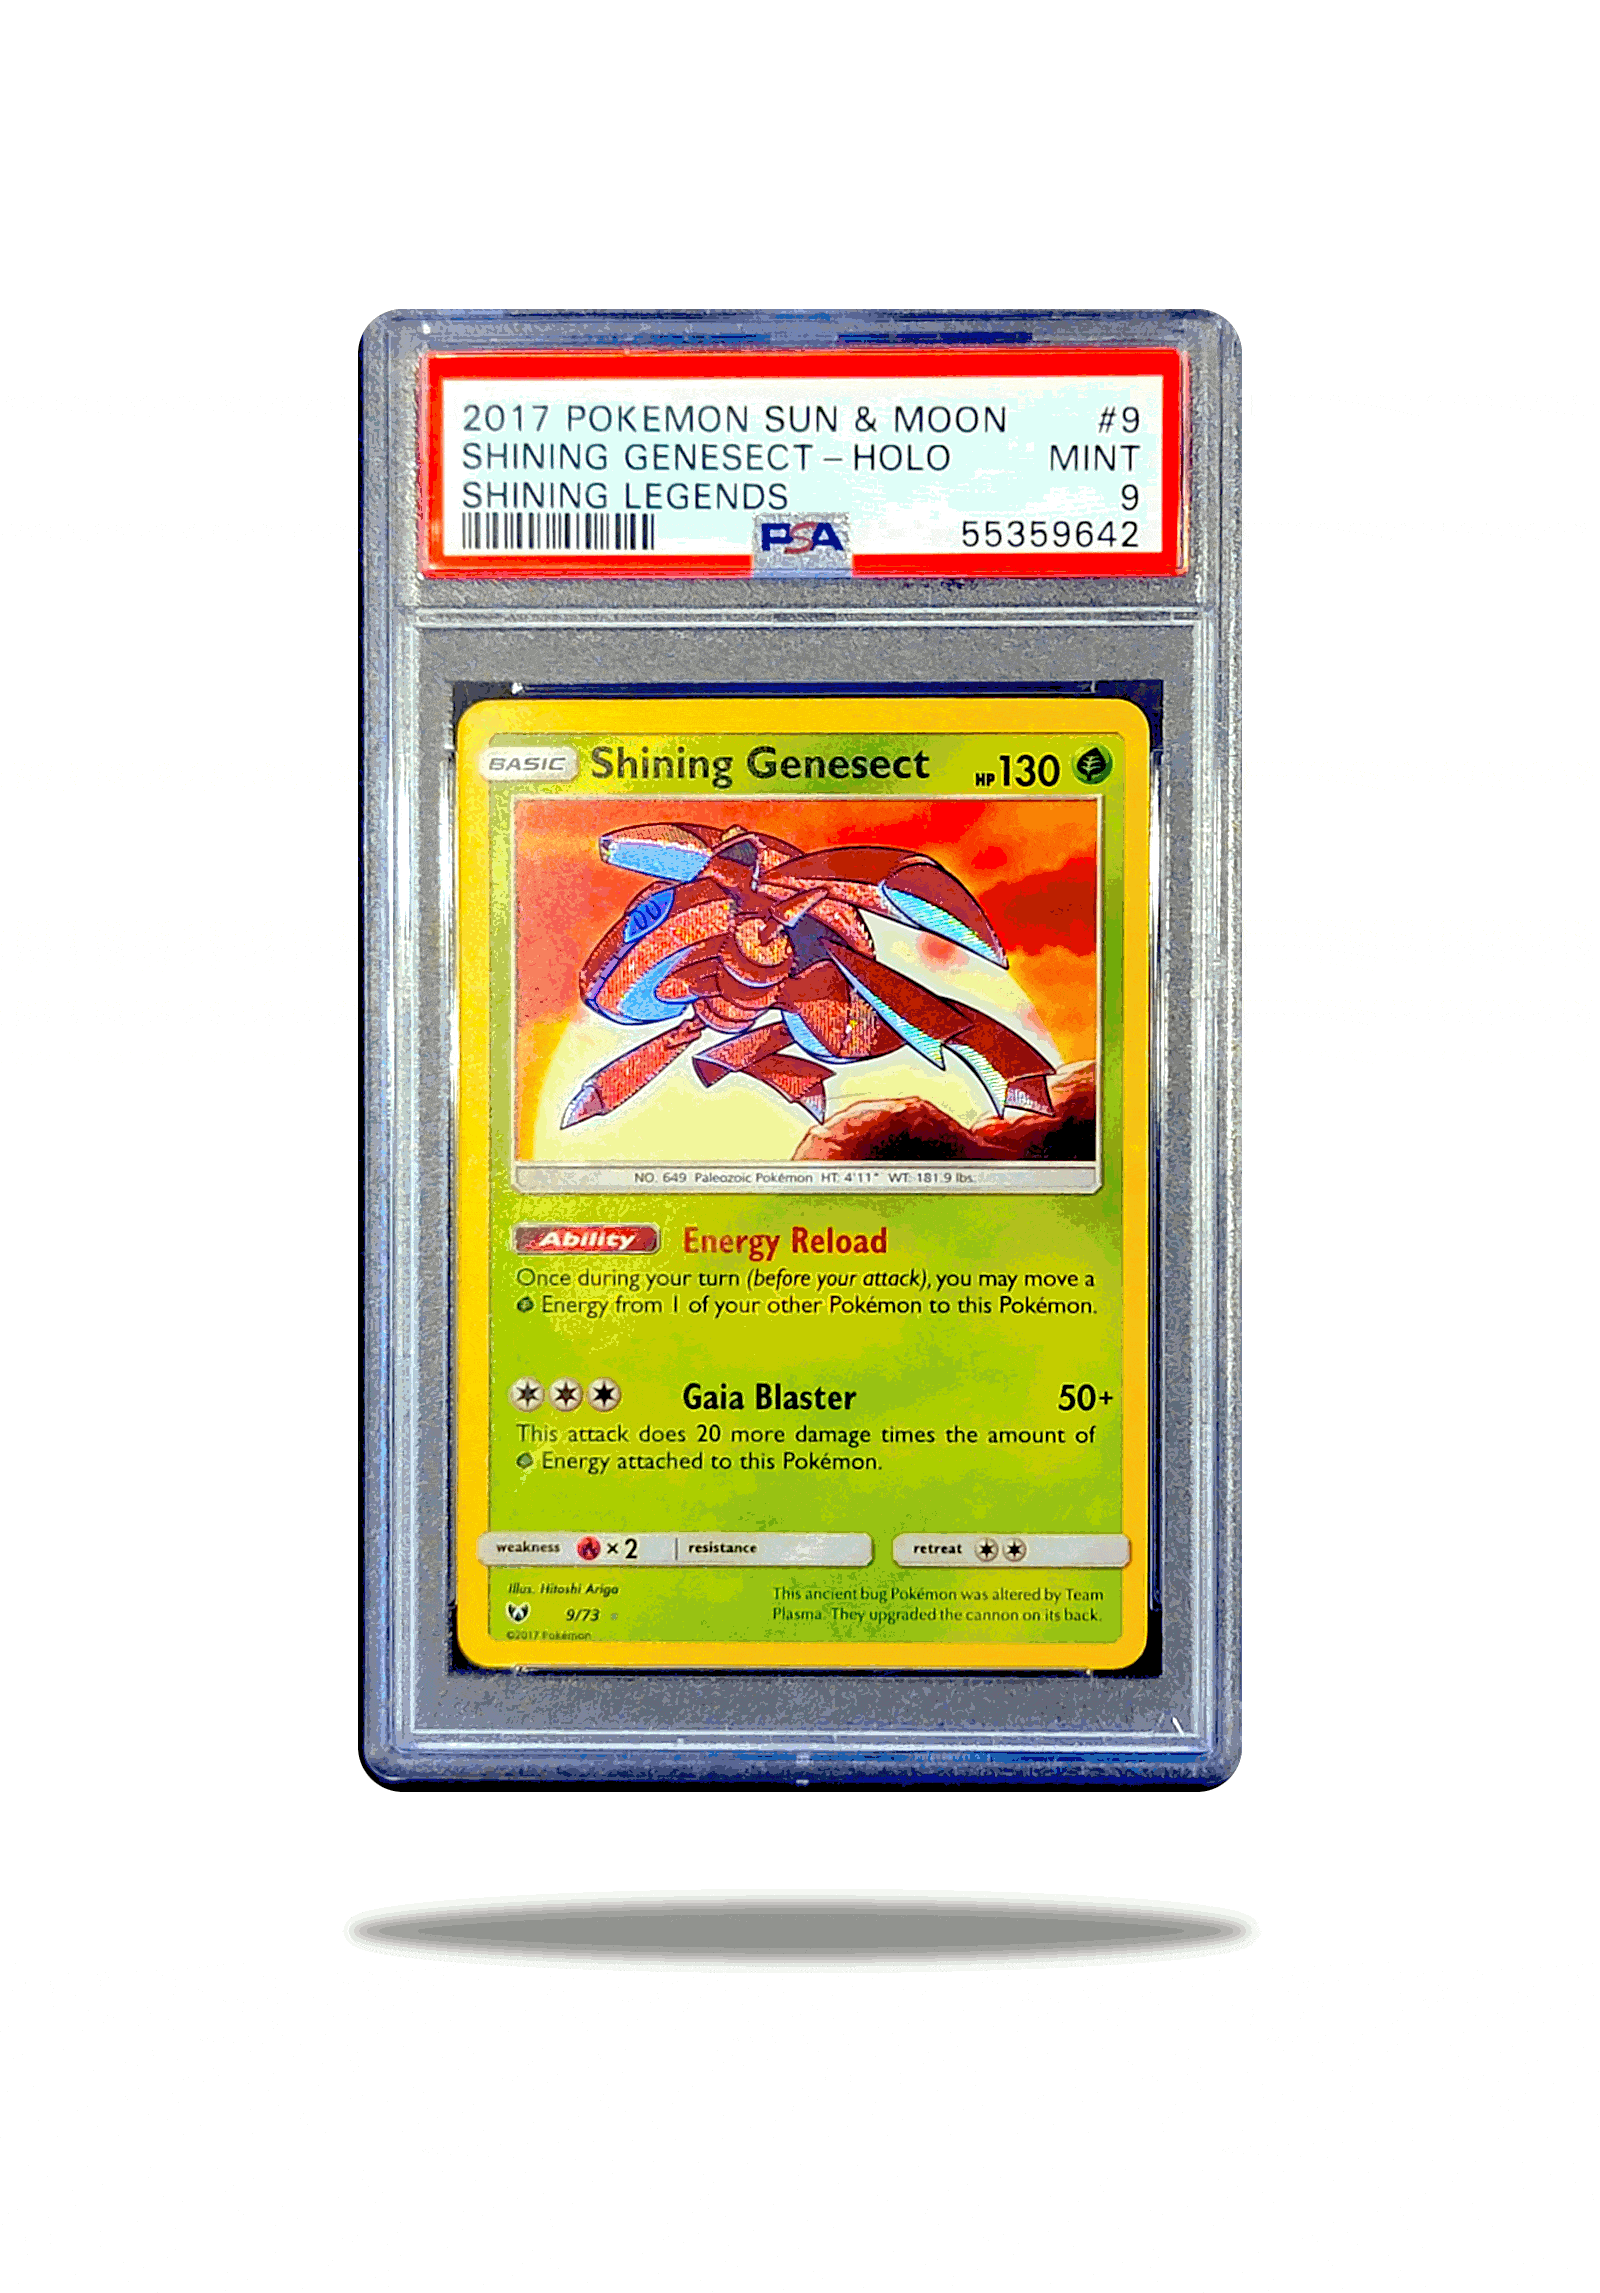  Pokemon - Shining Genesect - 9/73 - Holo Rare - Sun